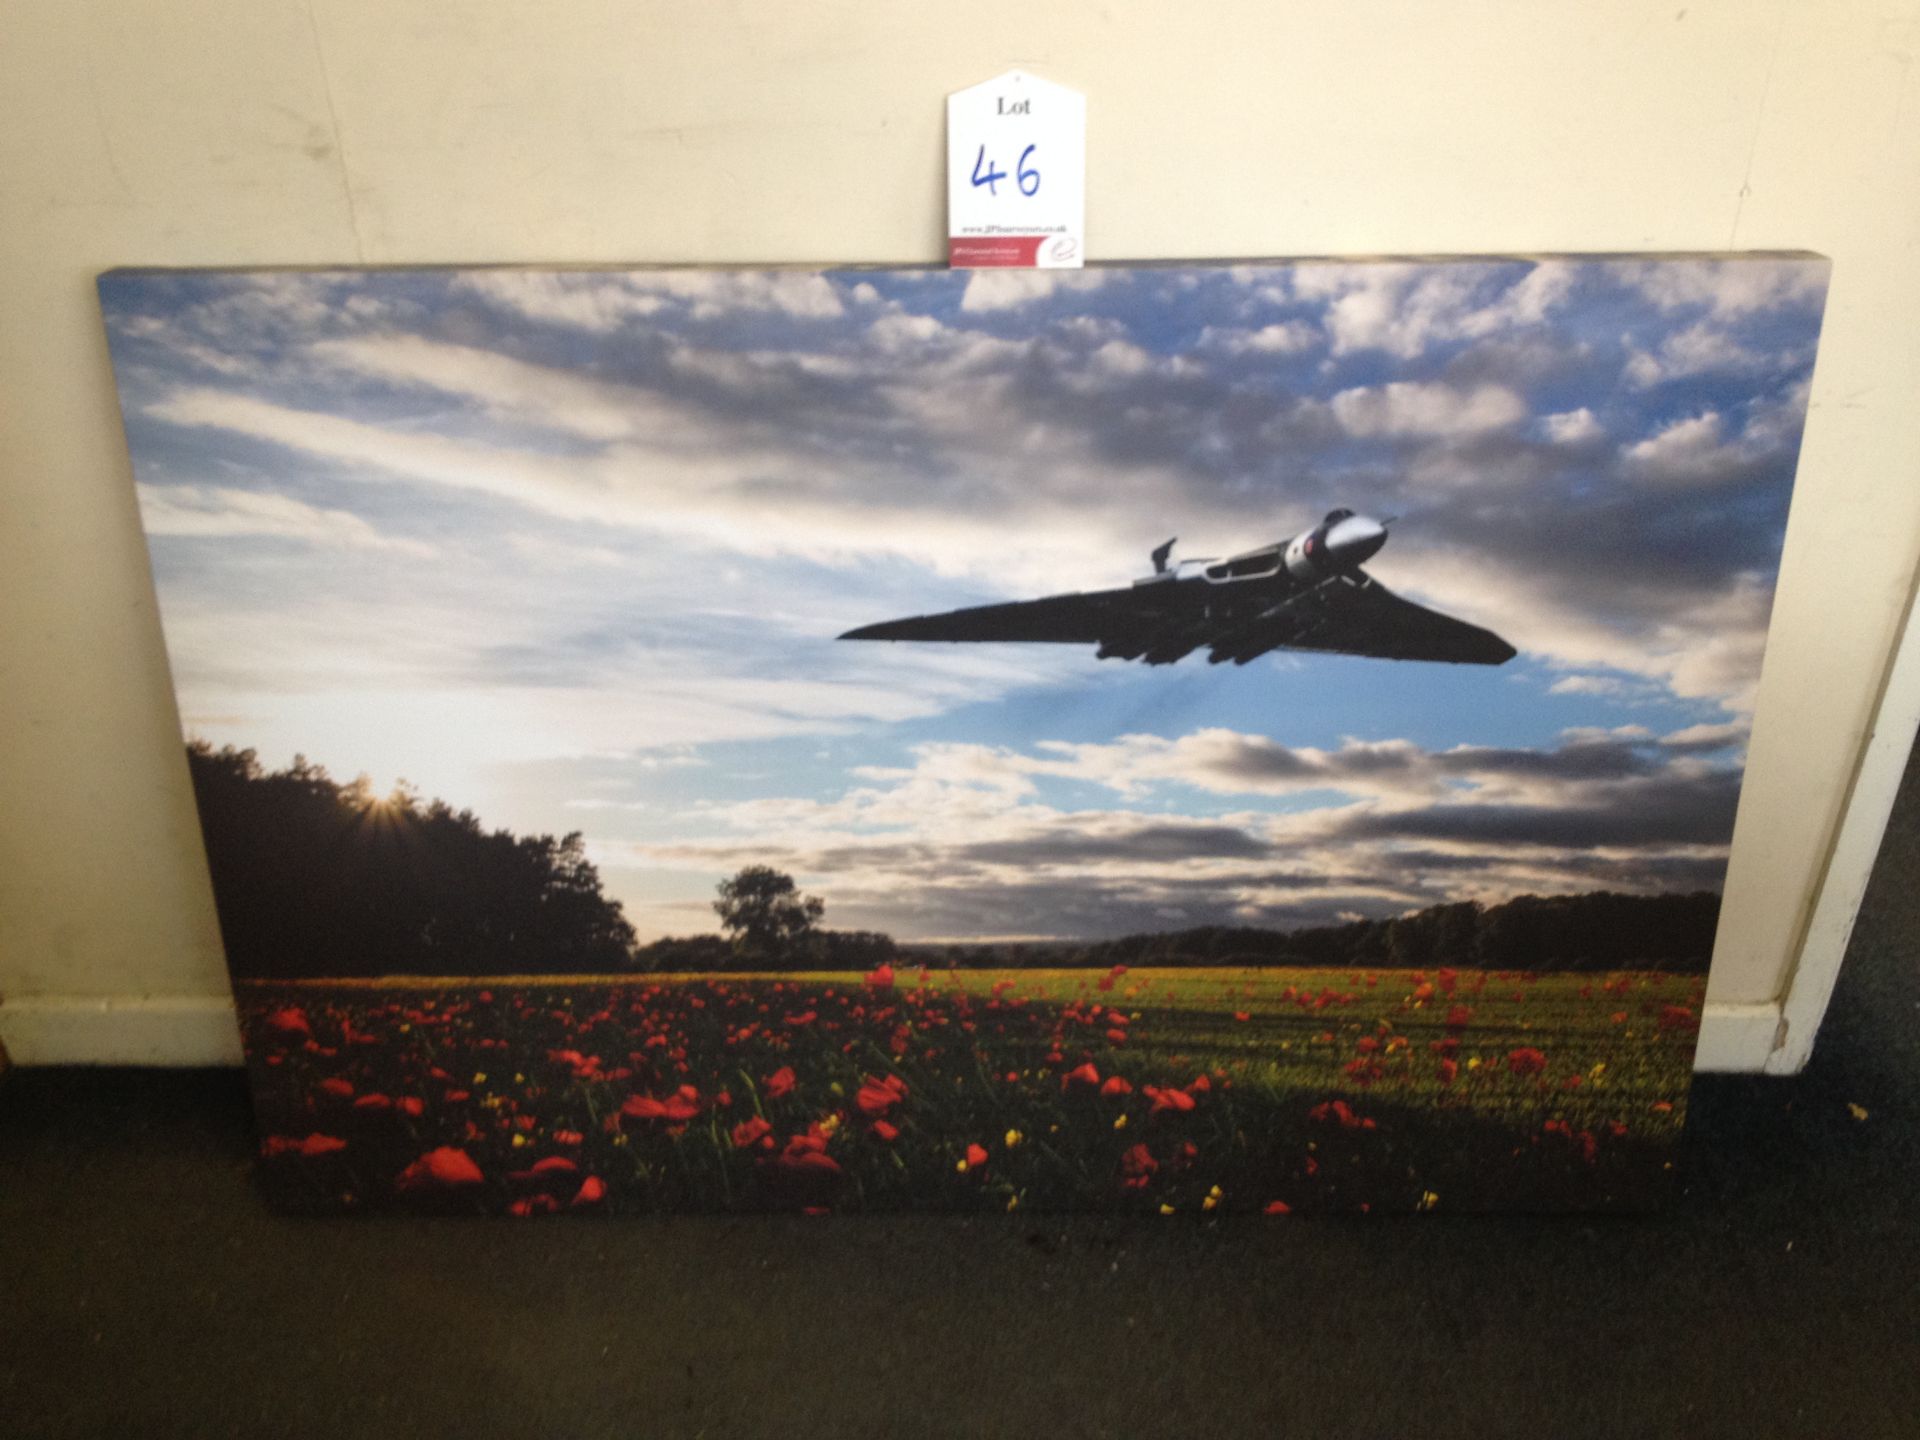 Vulcan Bomber over Poppy Field Canvas Print Size: 137 x 92cm